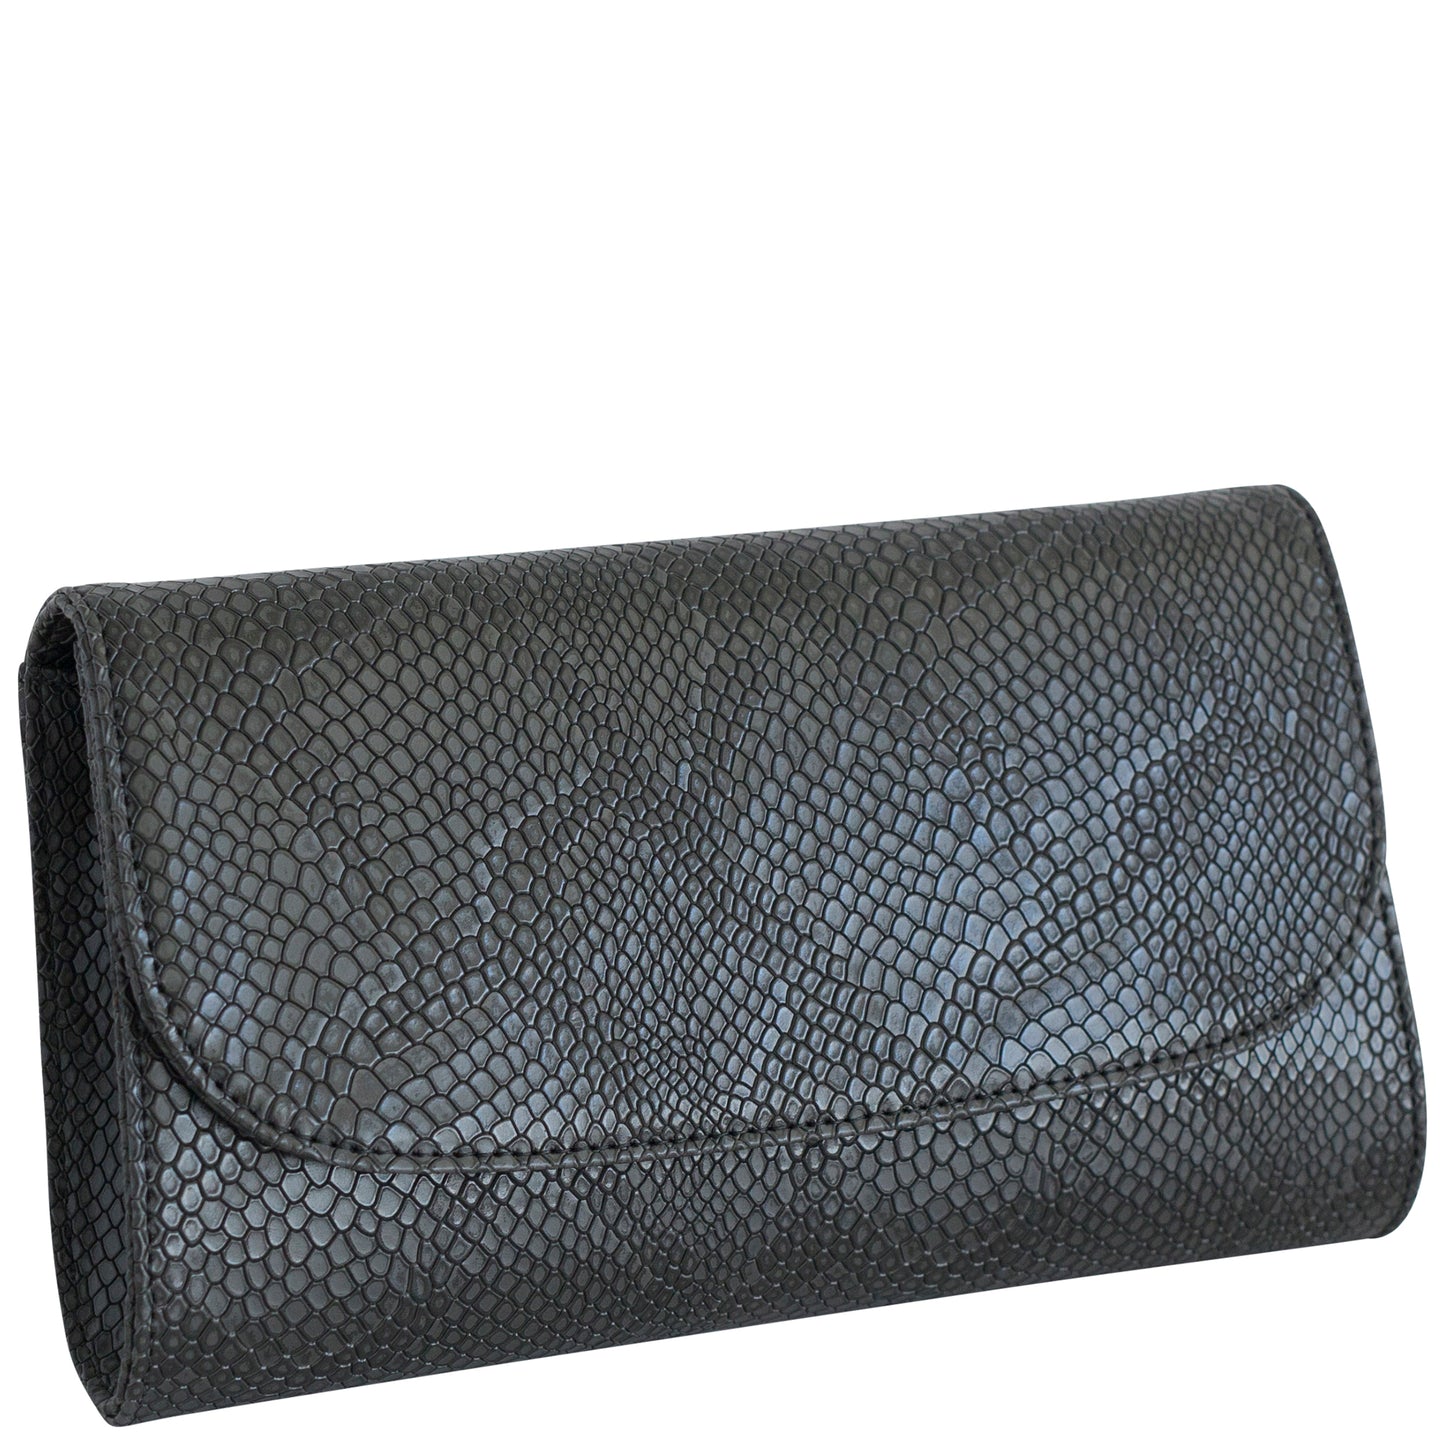 Svala luxury vegan black Didi clutch chain strap handbag 